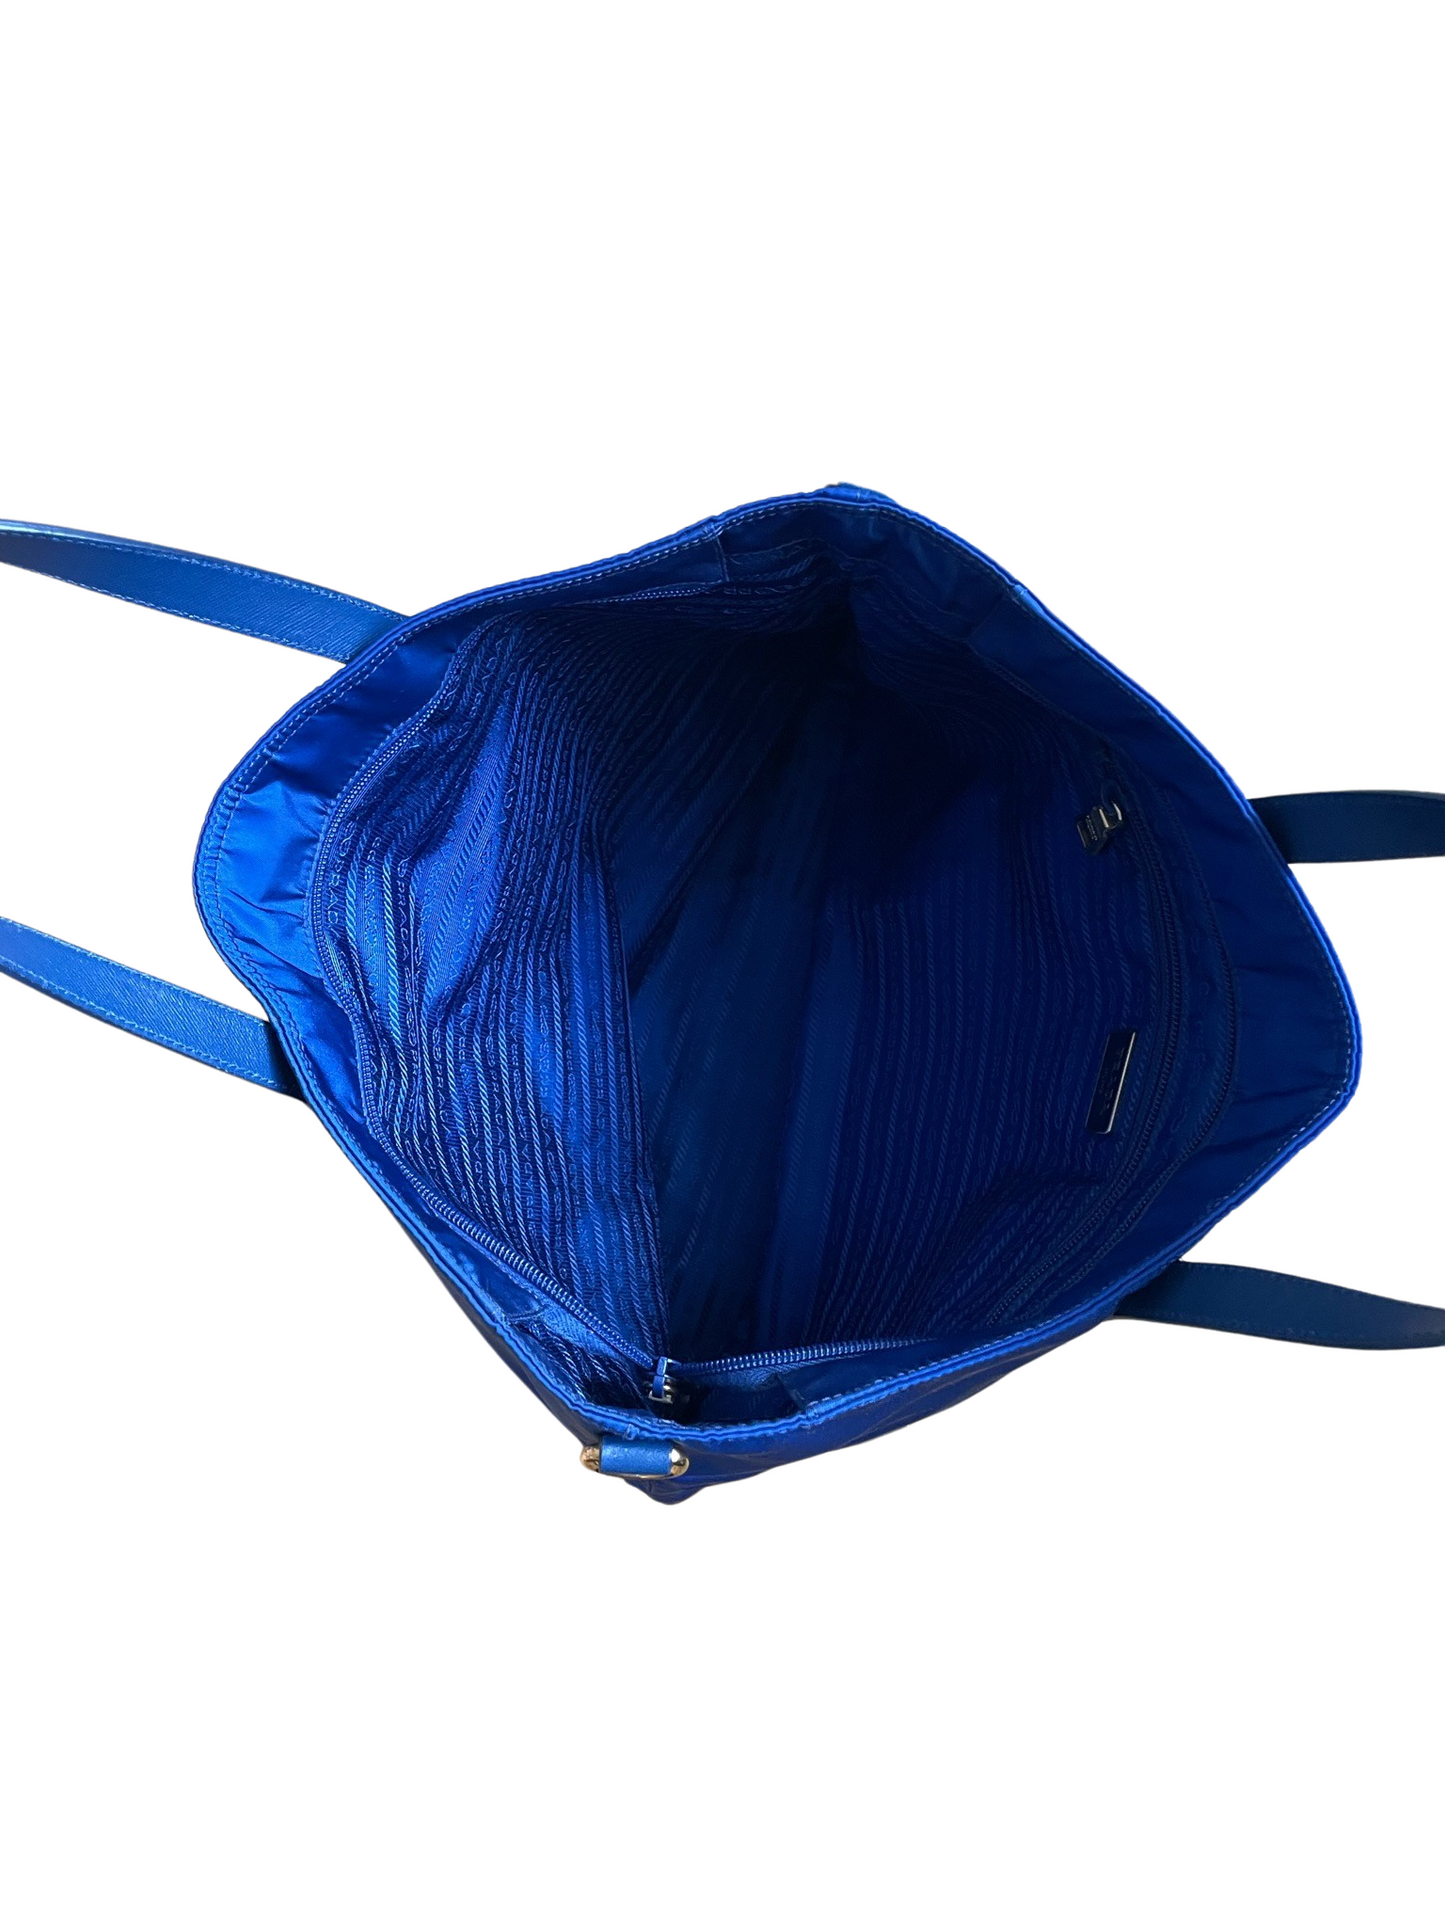 Prada Blue Nylon & Leather Tote Bag